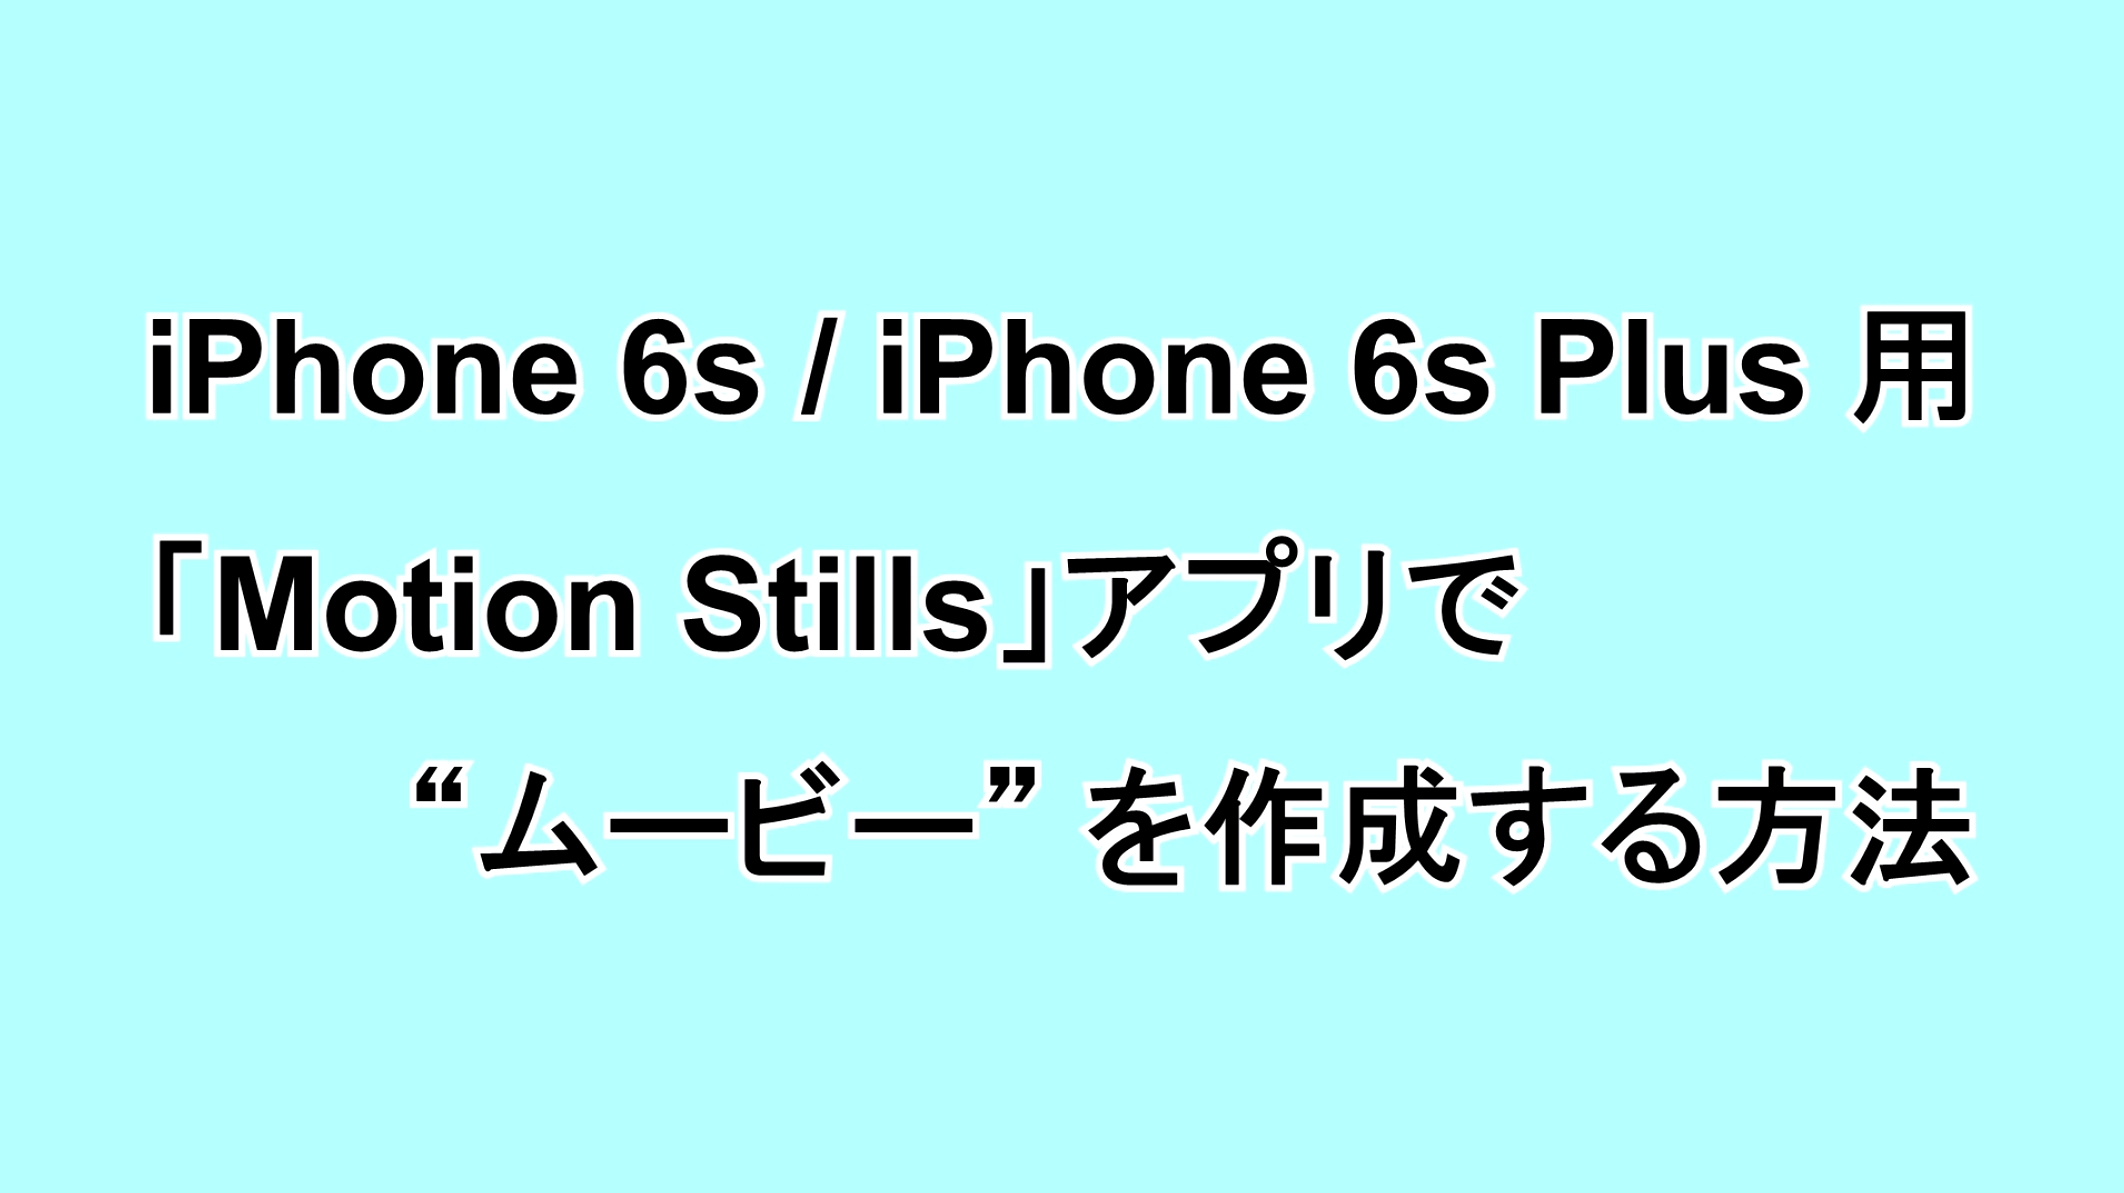 iPhone 6s/6s Plus用 「Motion Stills」アプリで“ムービー”を作成する方法